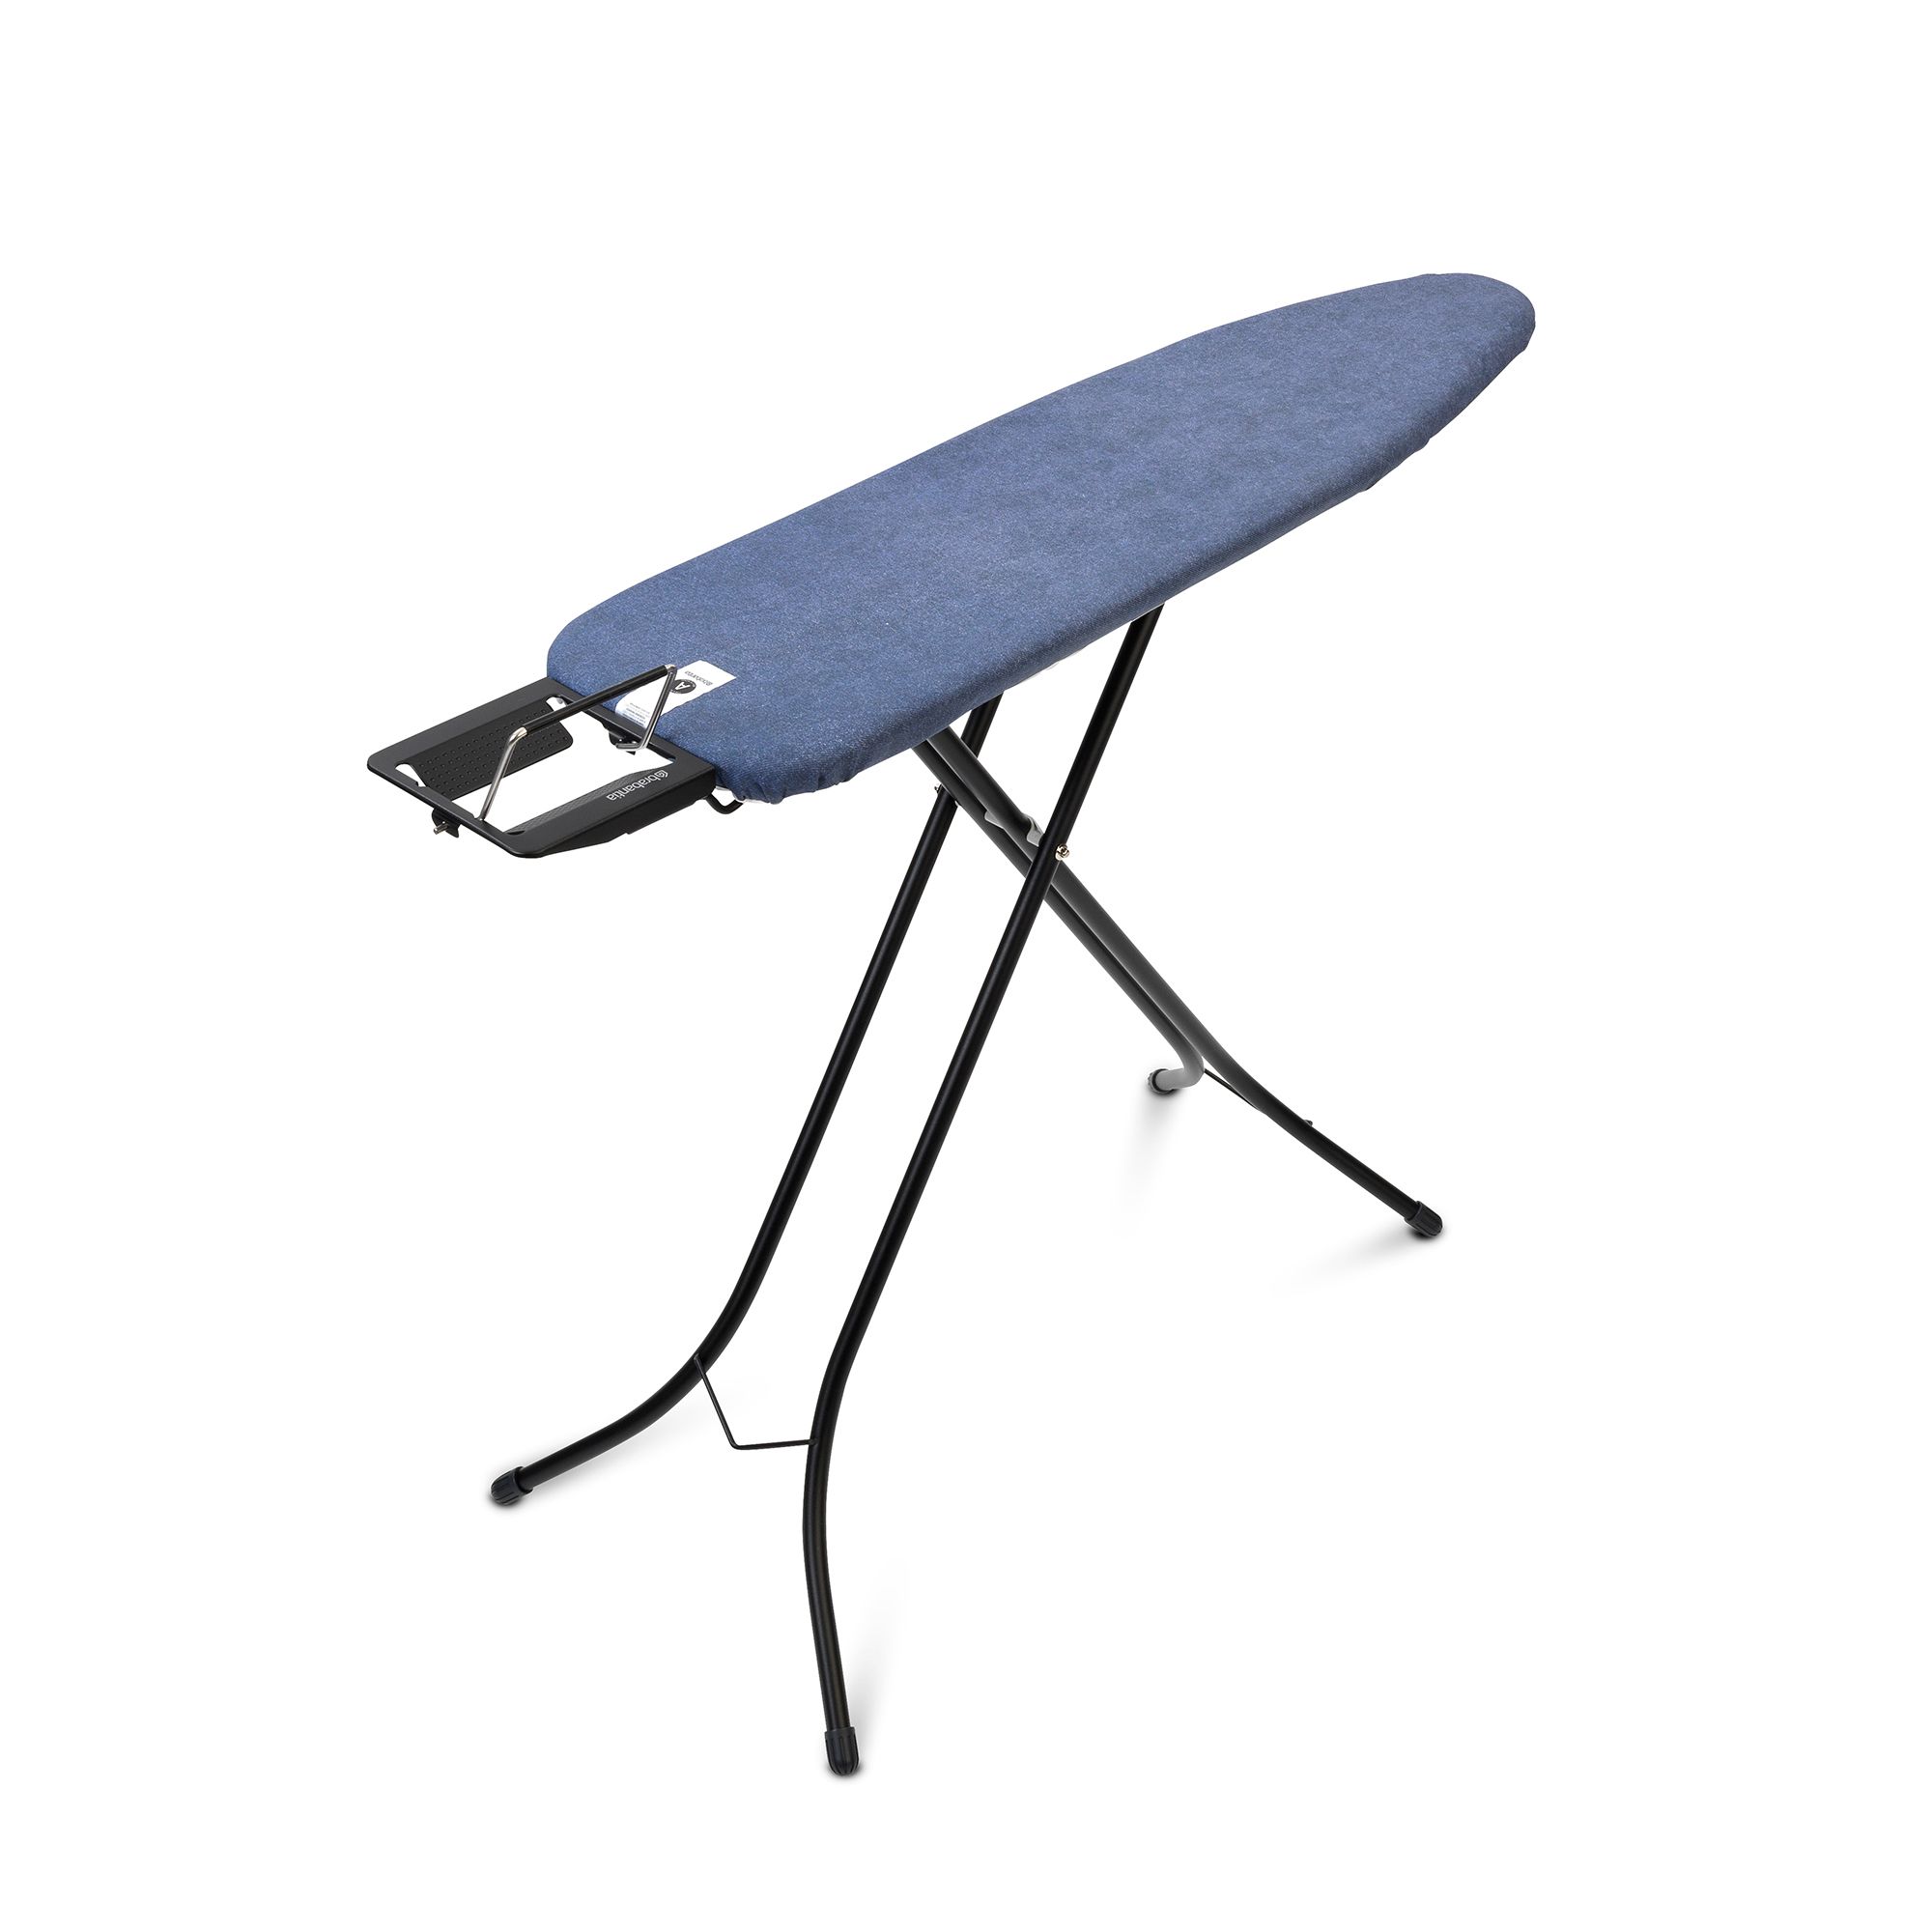 Brabantia Denim blue Ironing board 1100mm x 300mm